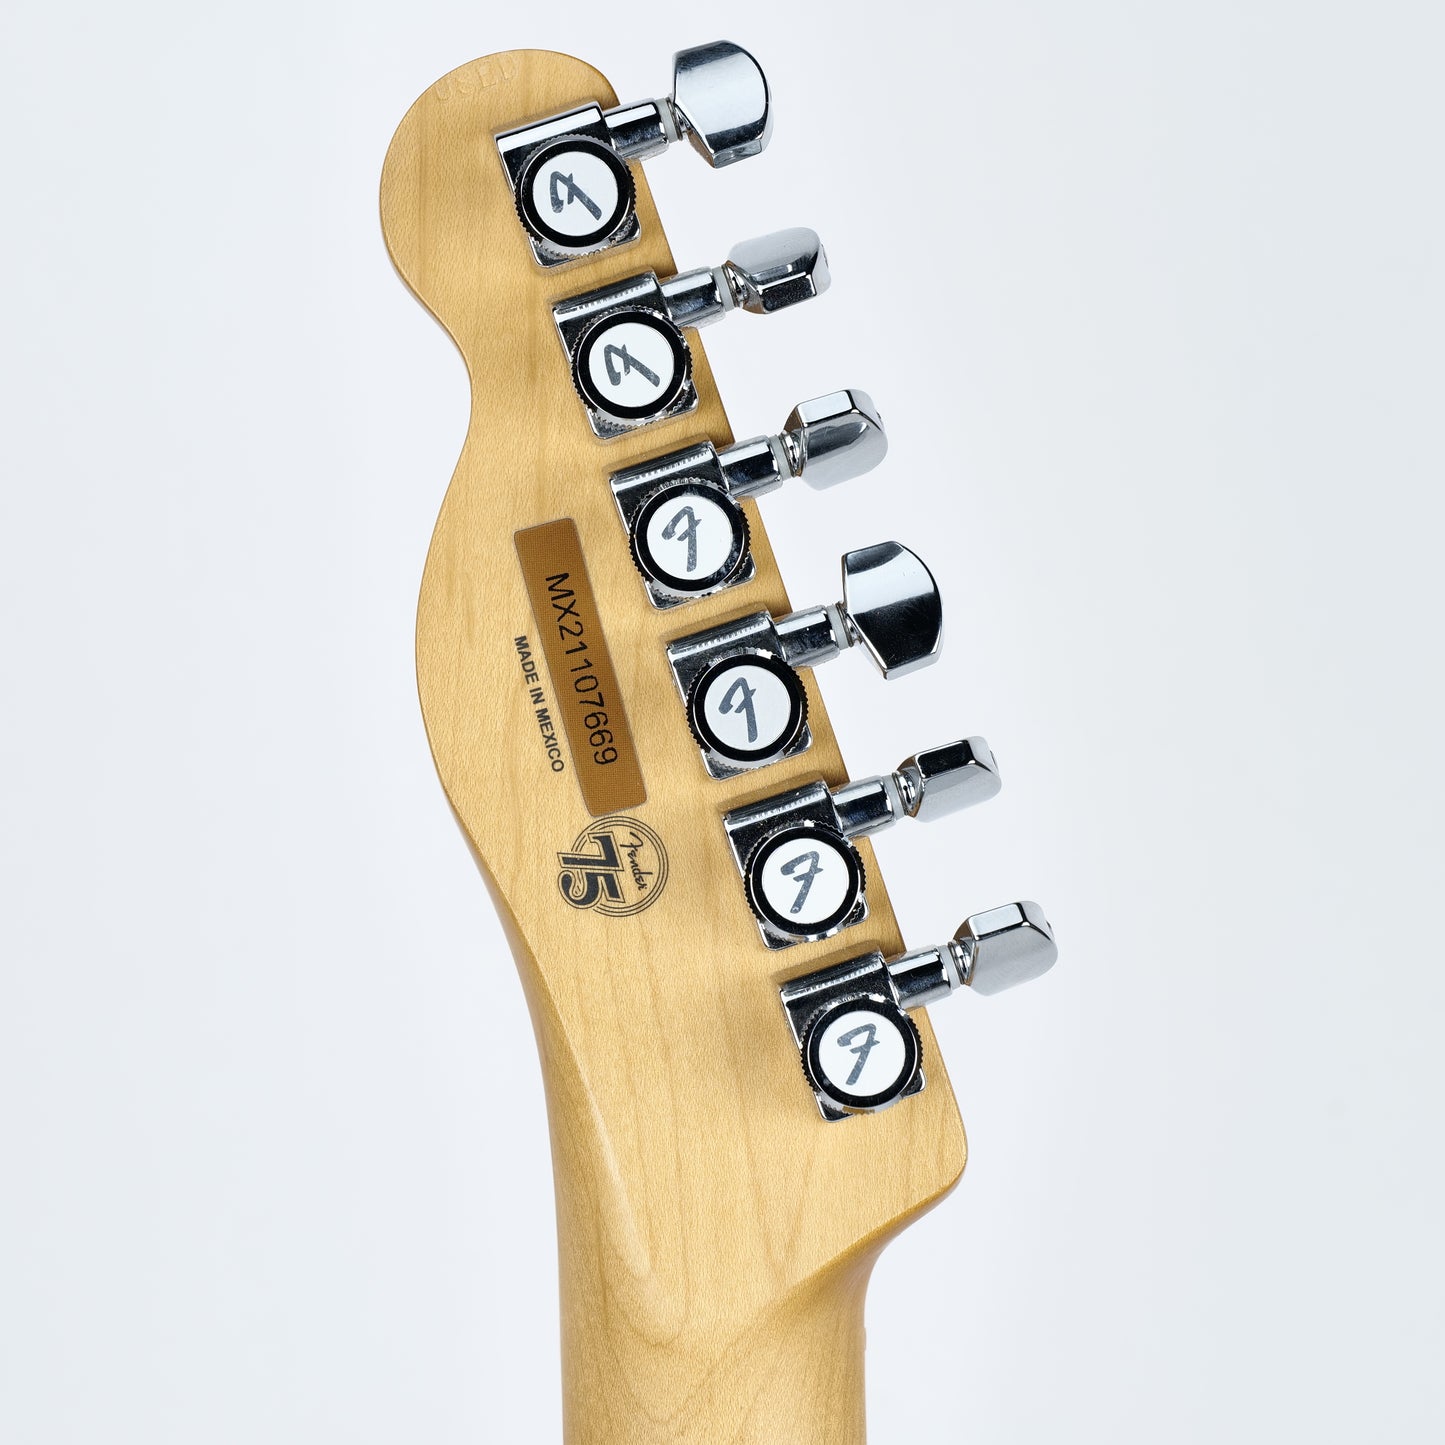 2021 Fender Player Plus Nashville Telecaster - Butterscotch Blonde